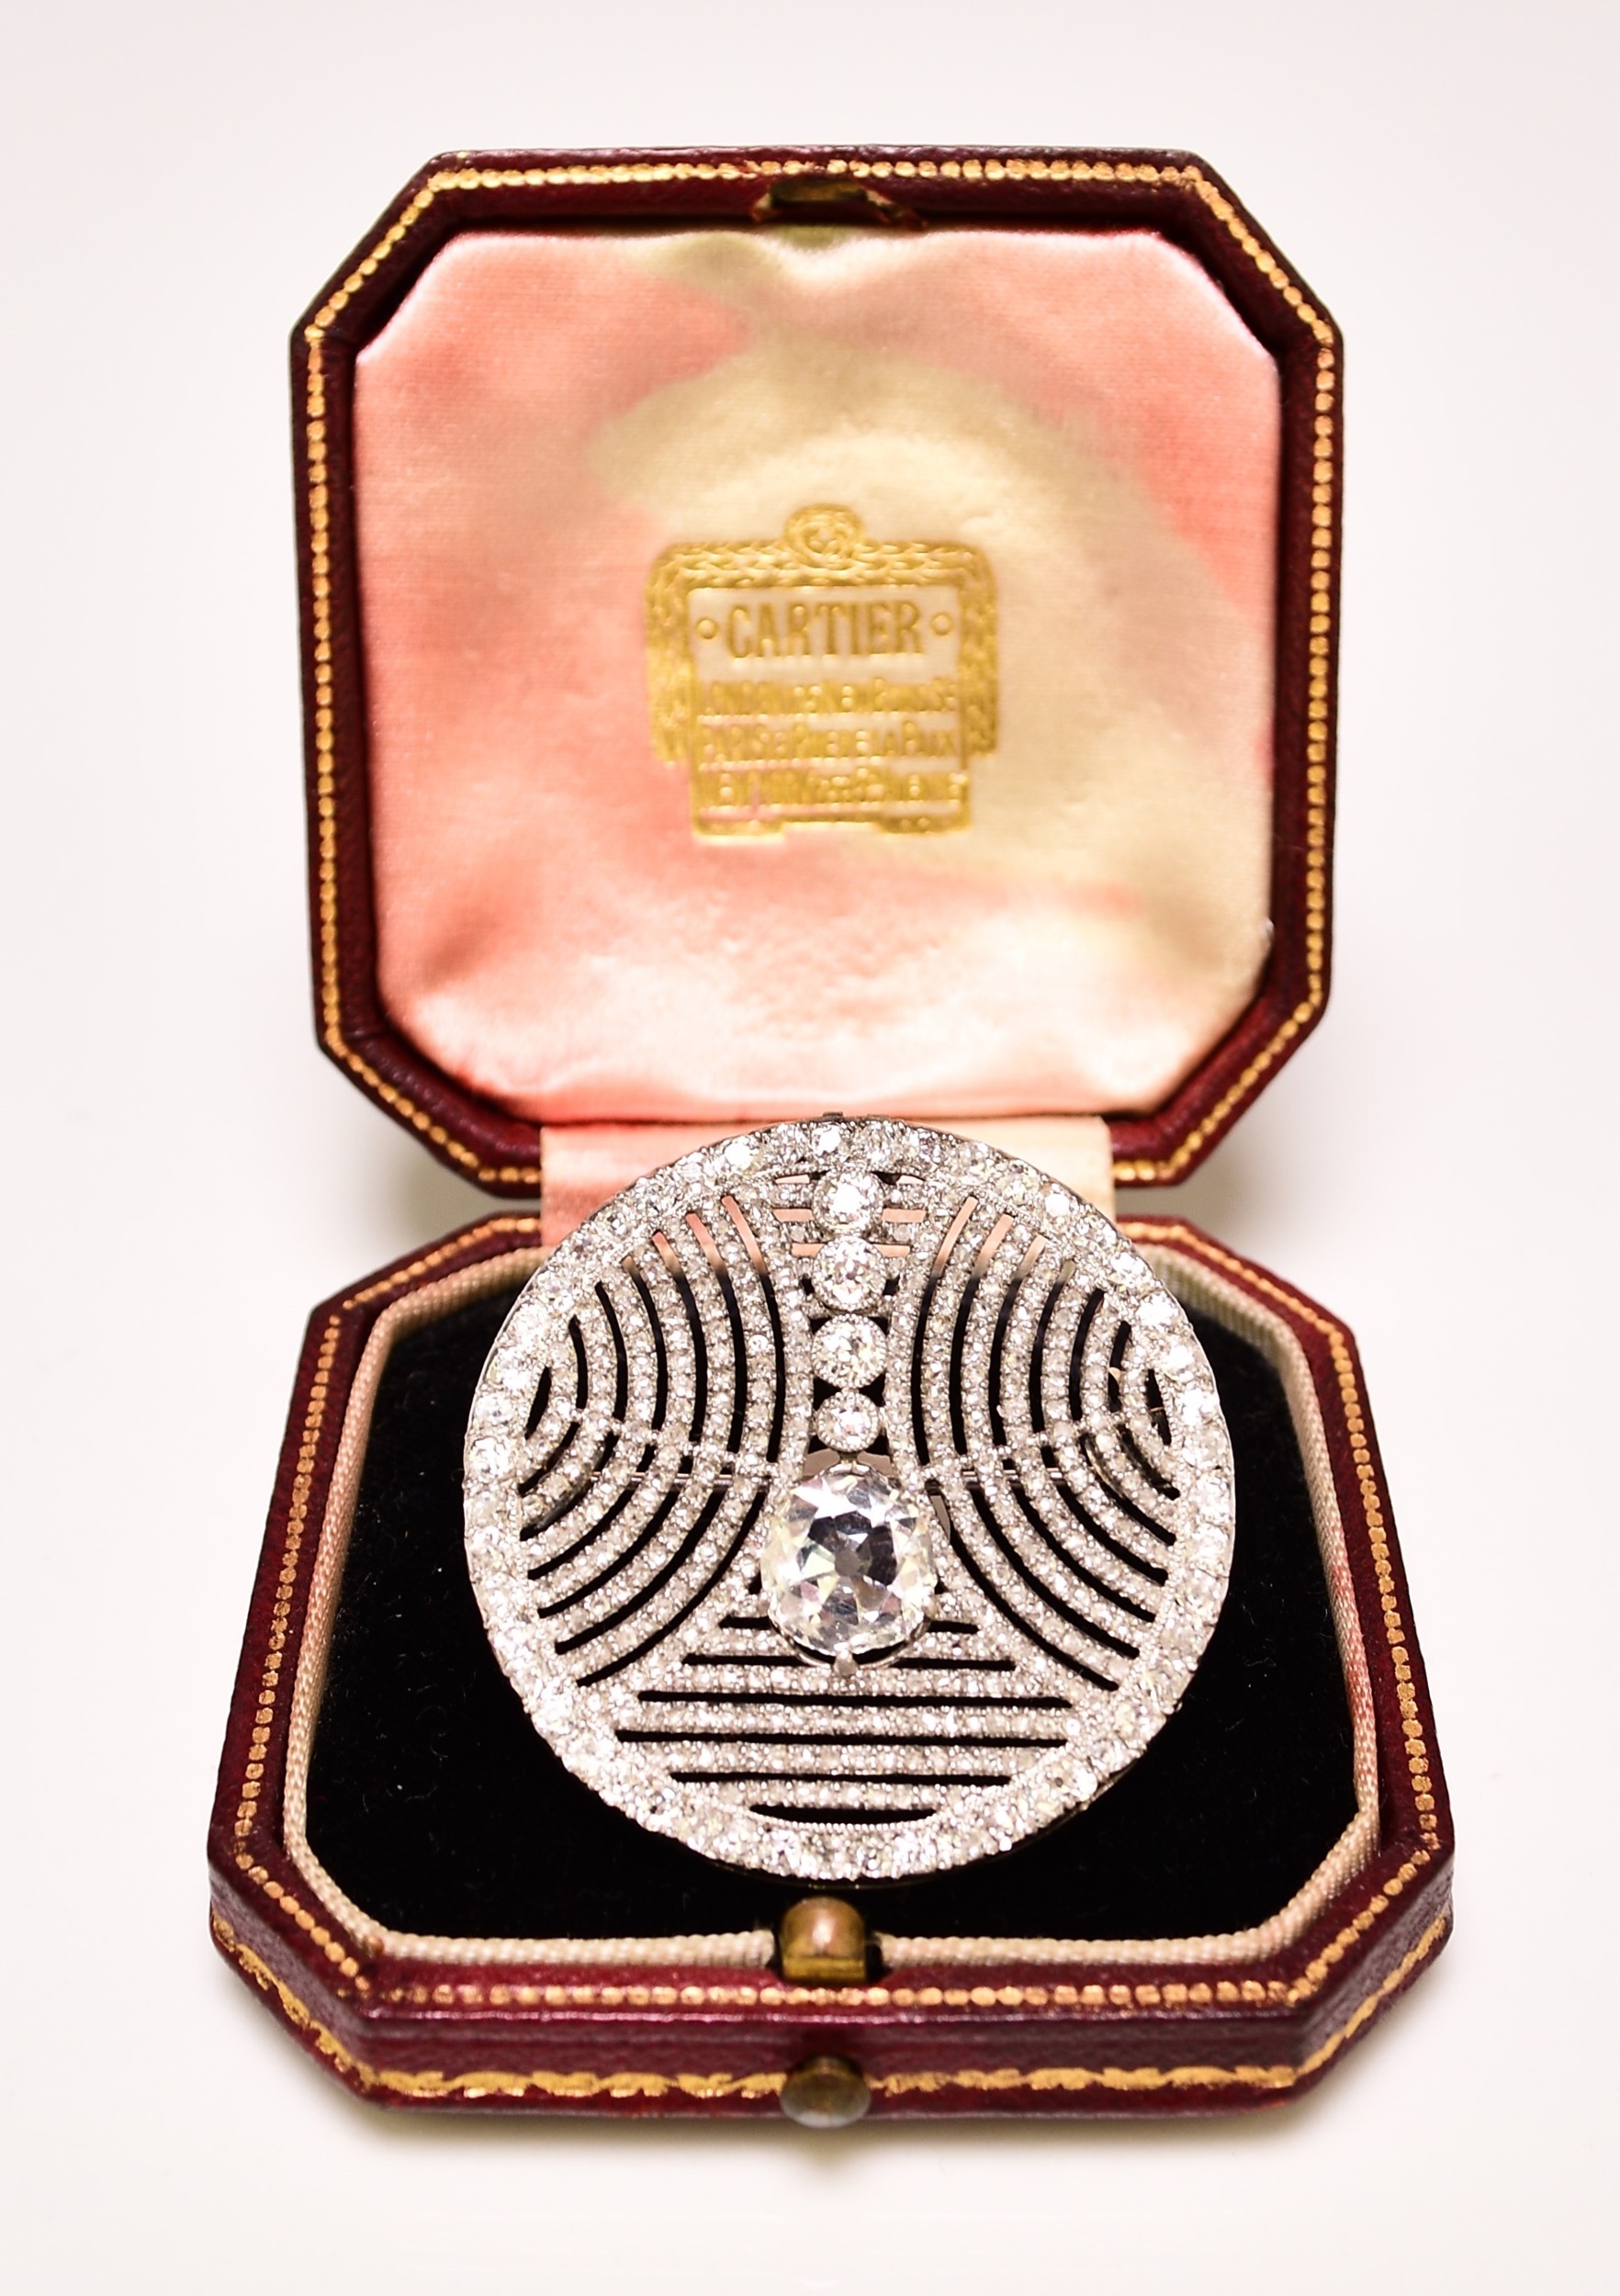 Art Deco diamond set brooch by Cartier